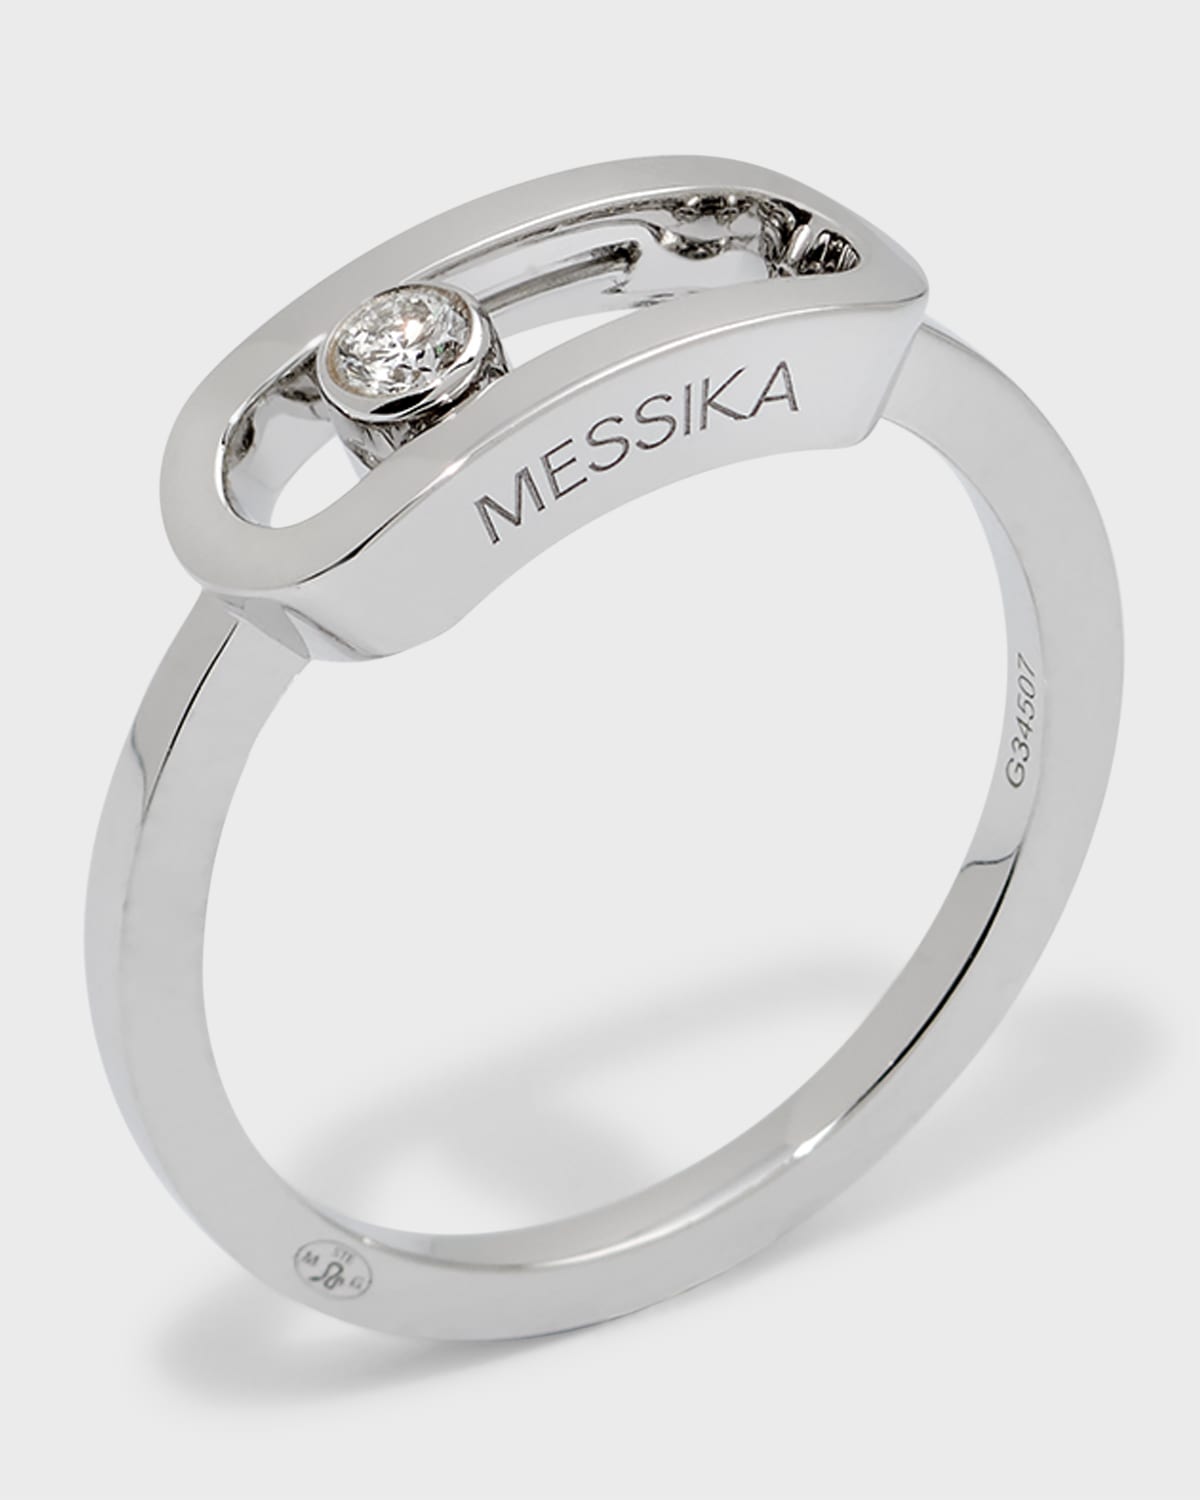 MESSIKA 18K WHITE GOLD MOVE UNO DIAMOND RING